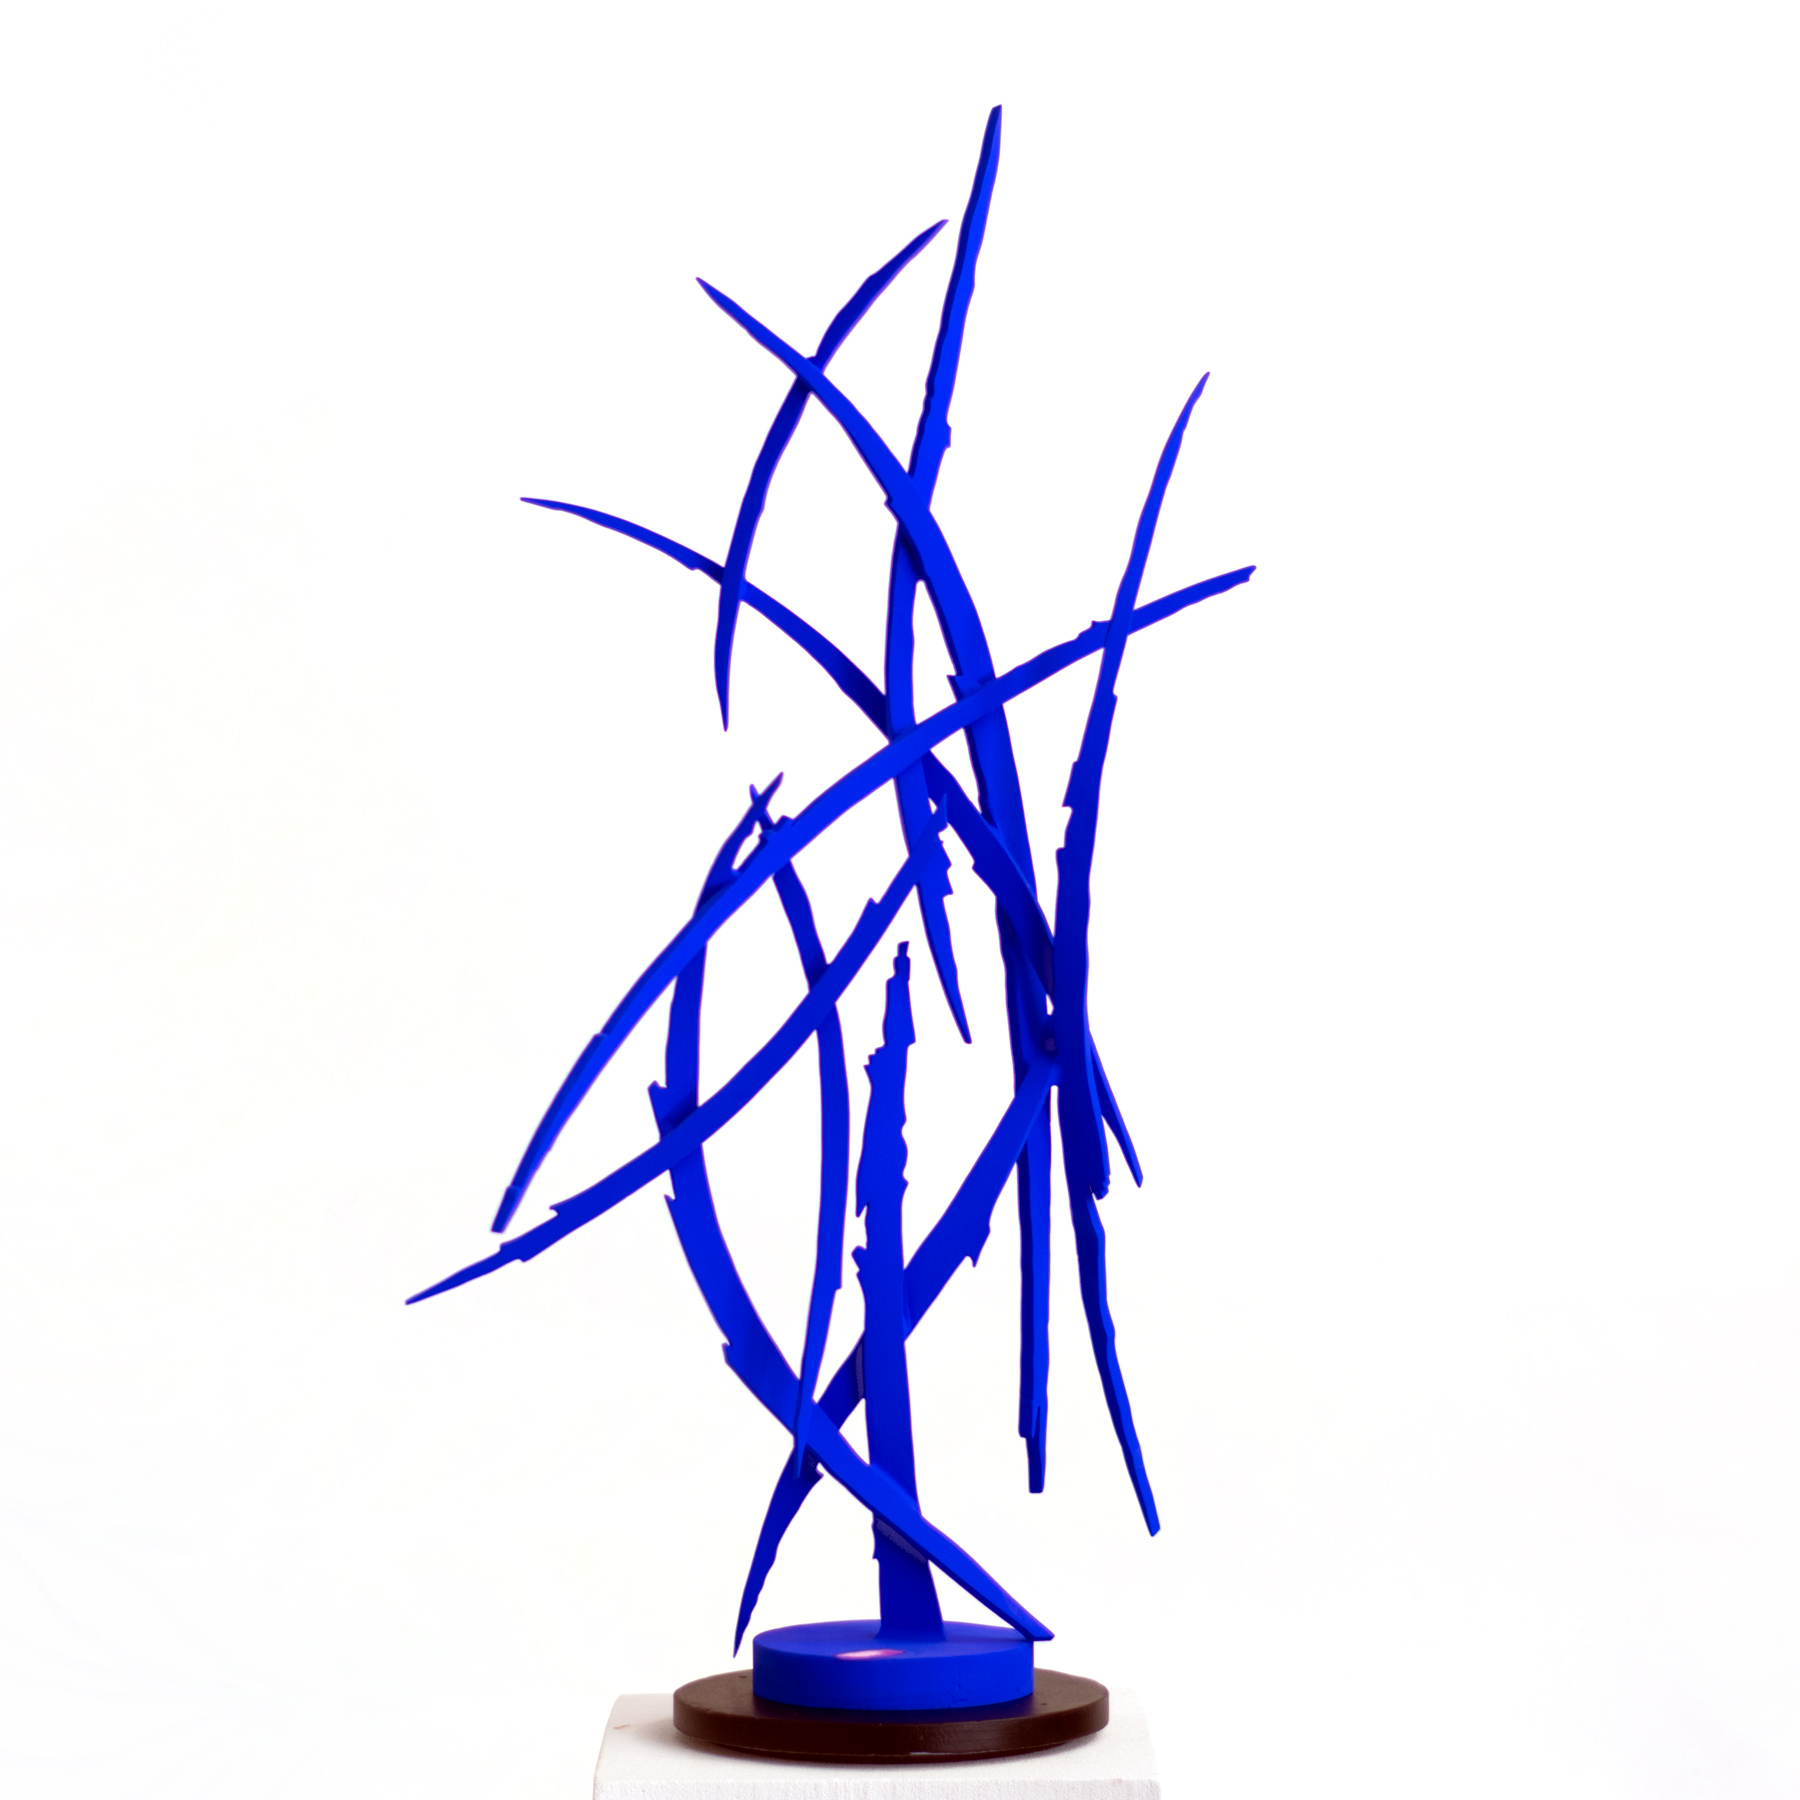 Blue No. 2, 2019. Sculpture by Adrian Mauriks